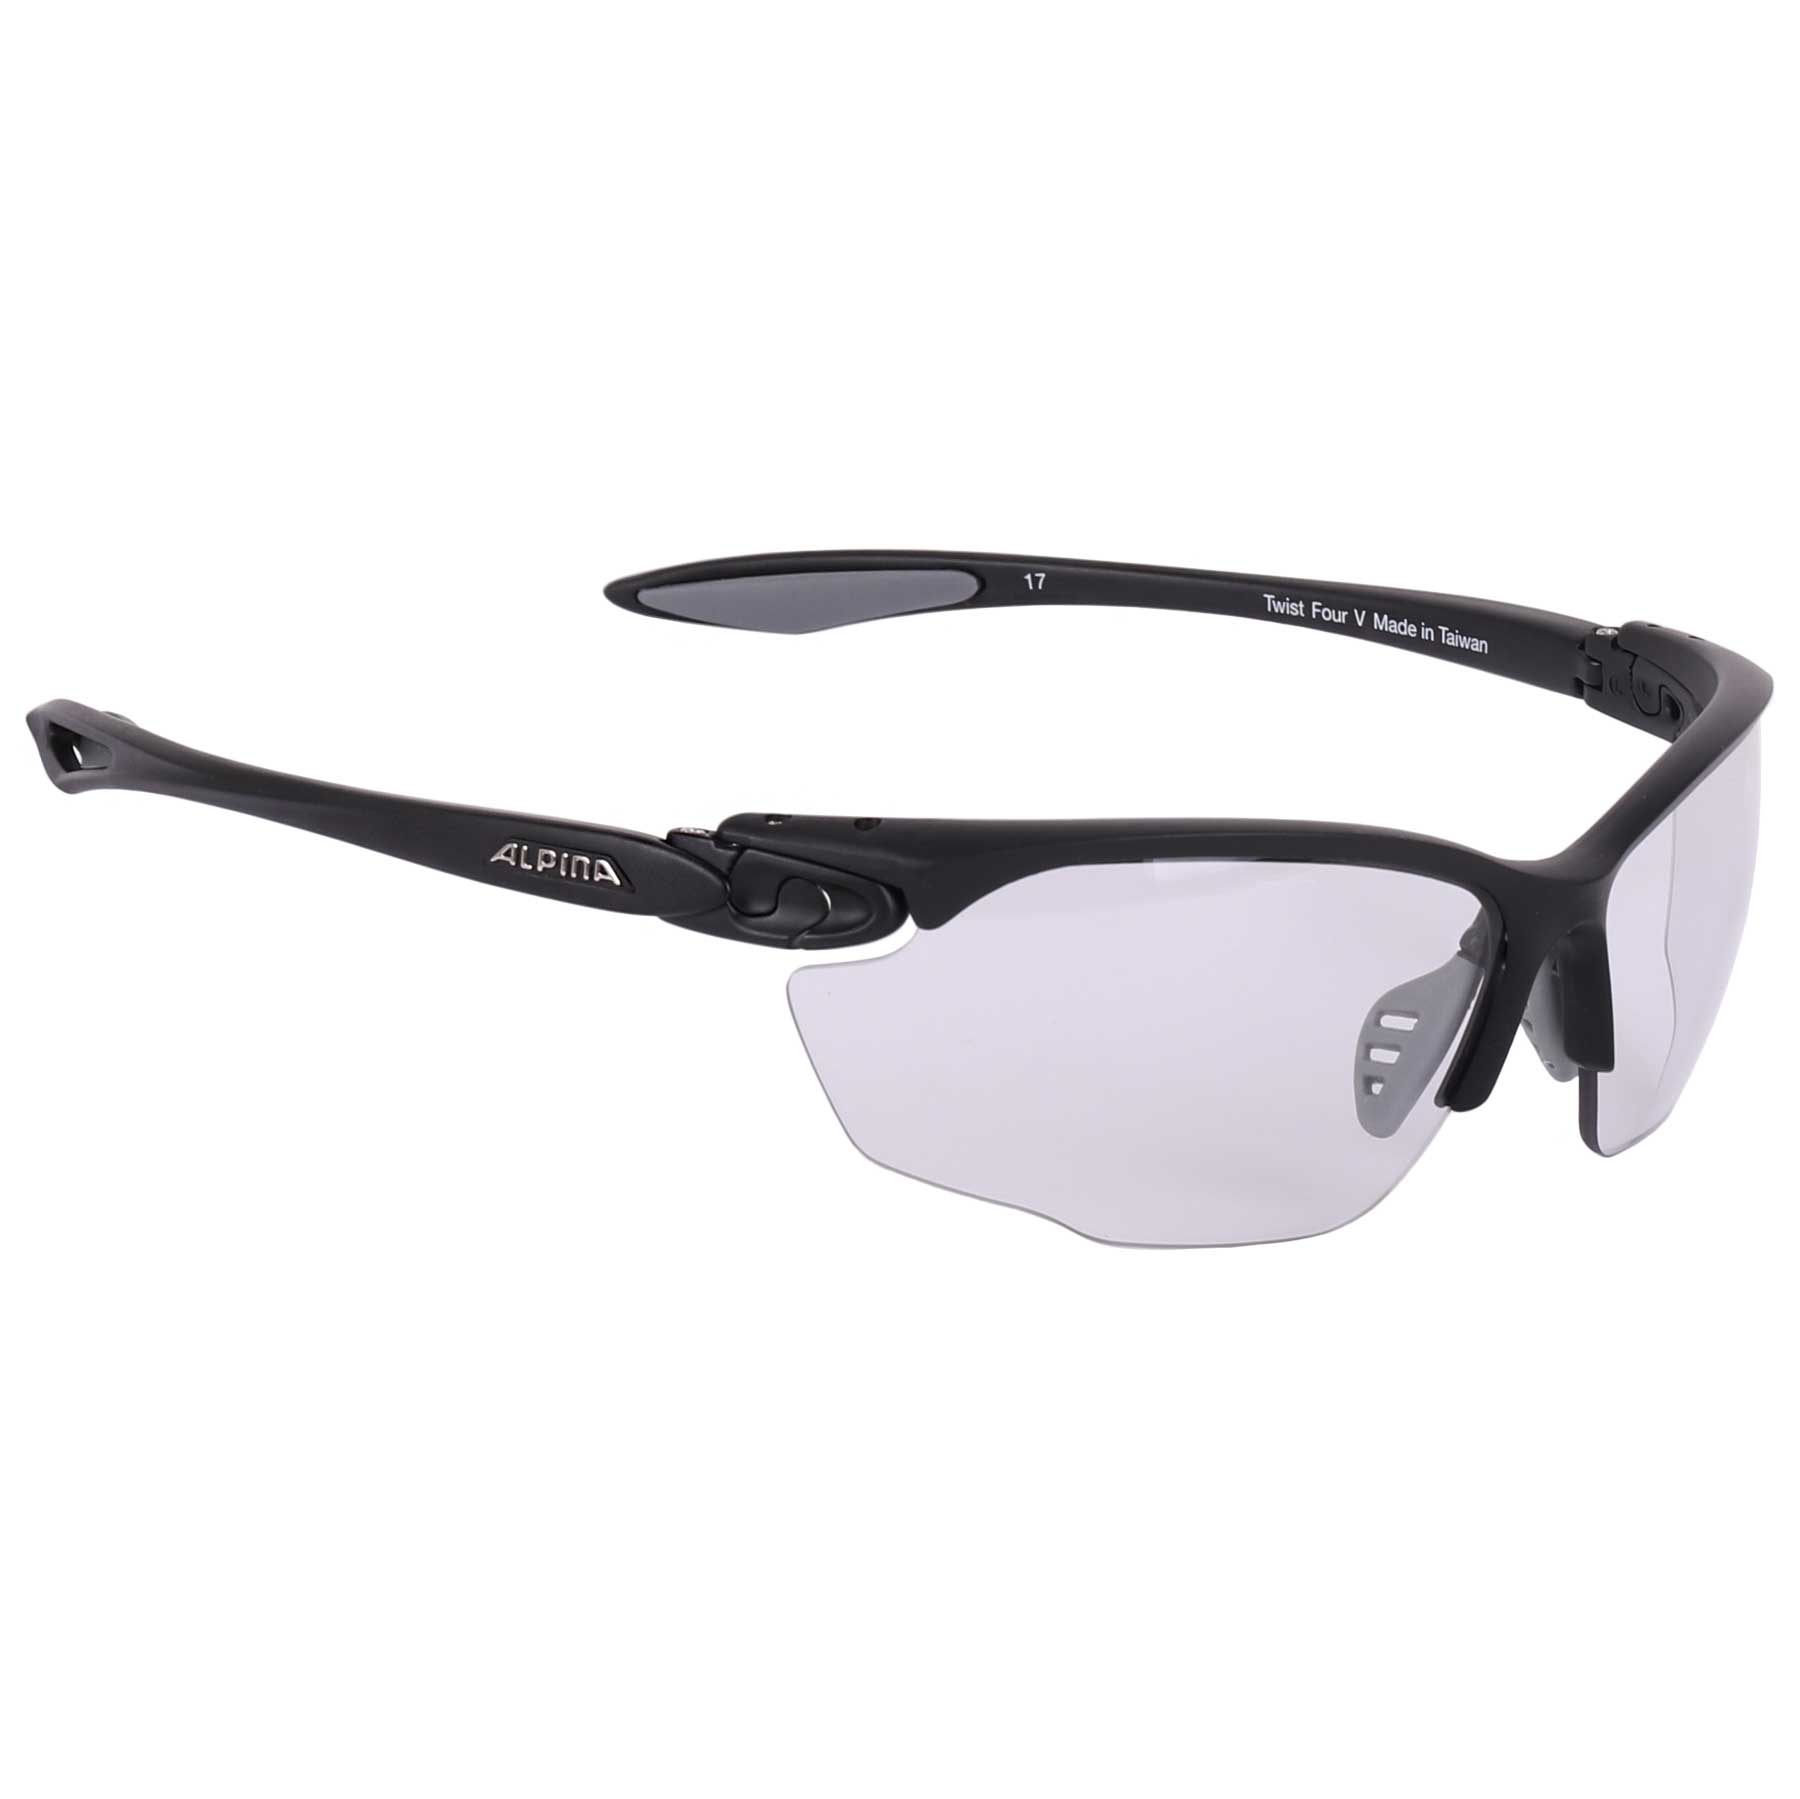 Productfoto van Alpina Twist Four V Glasses - black grey / Varioflex+ black